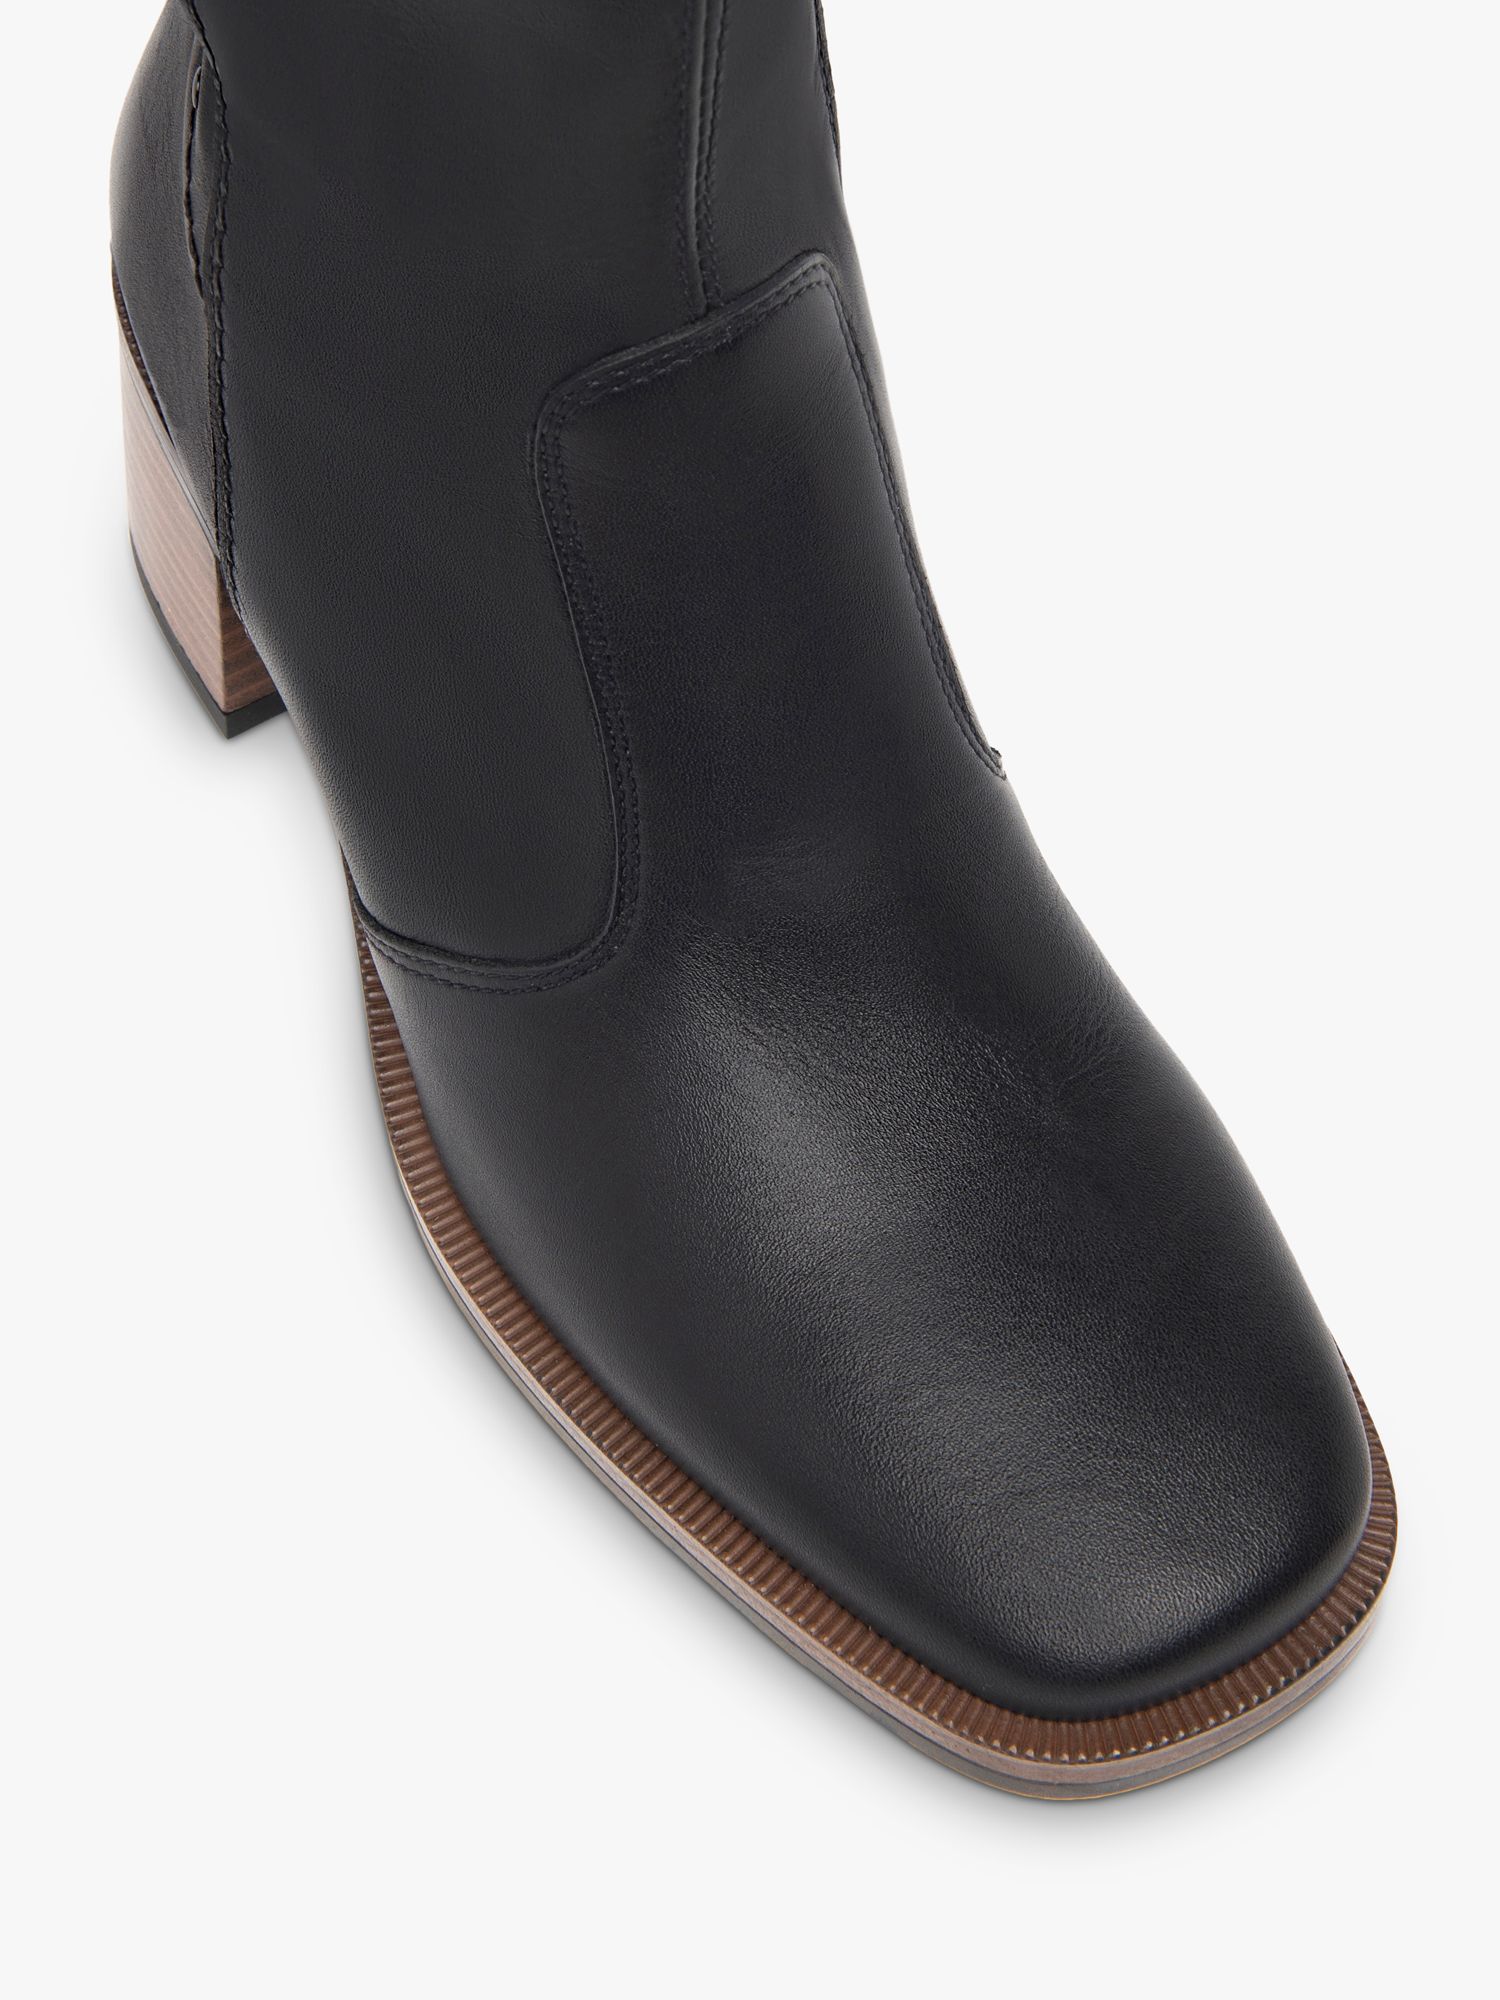 NeroGiardini Square Toe Block Heel Knee High Leather Boots, Black, 3